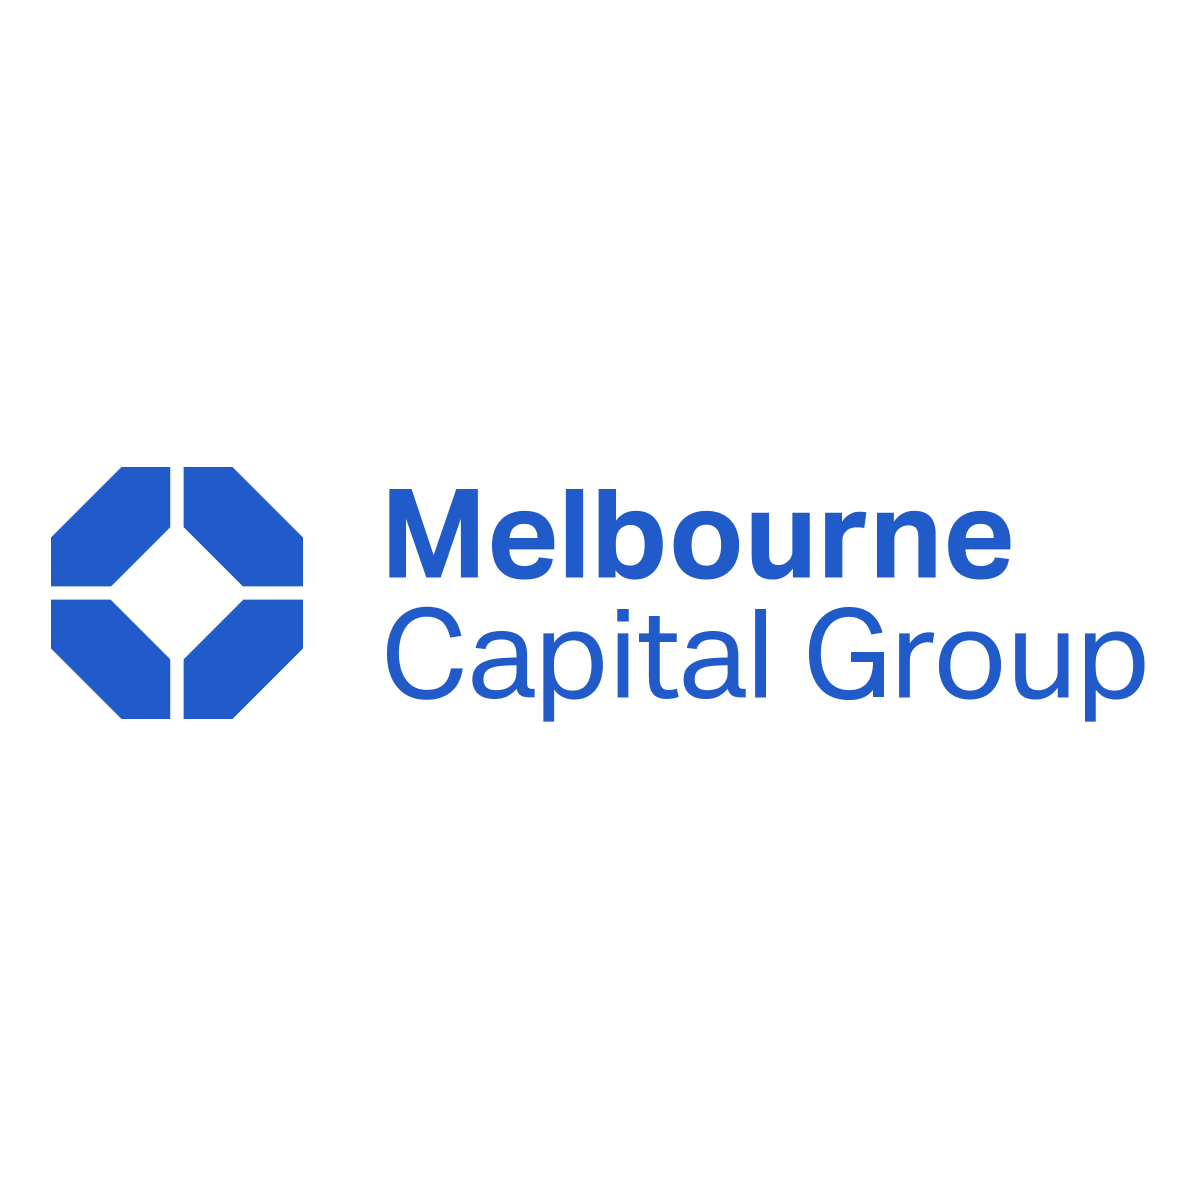 Melbourne Capital Group